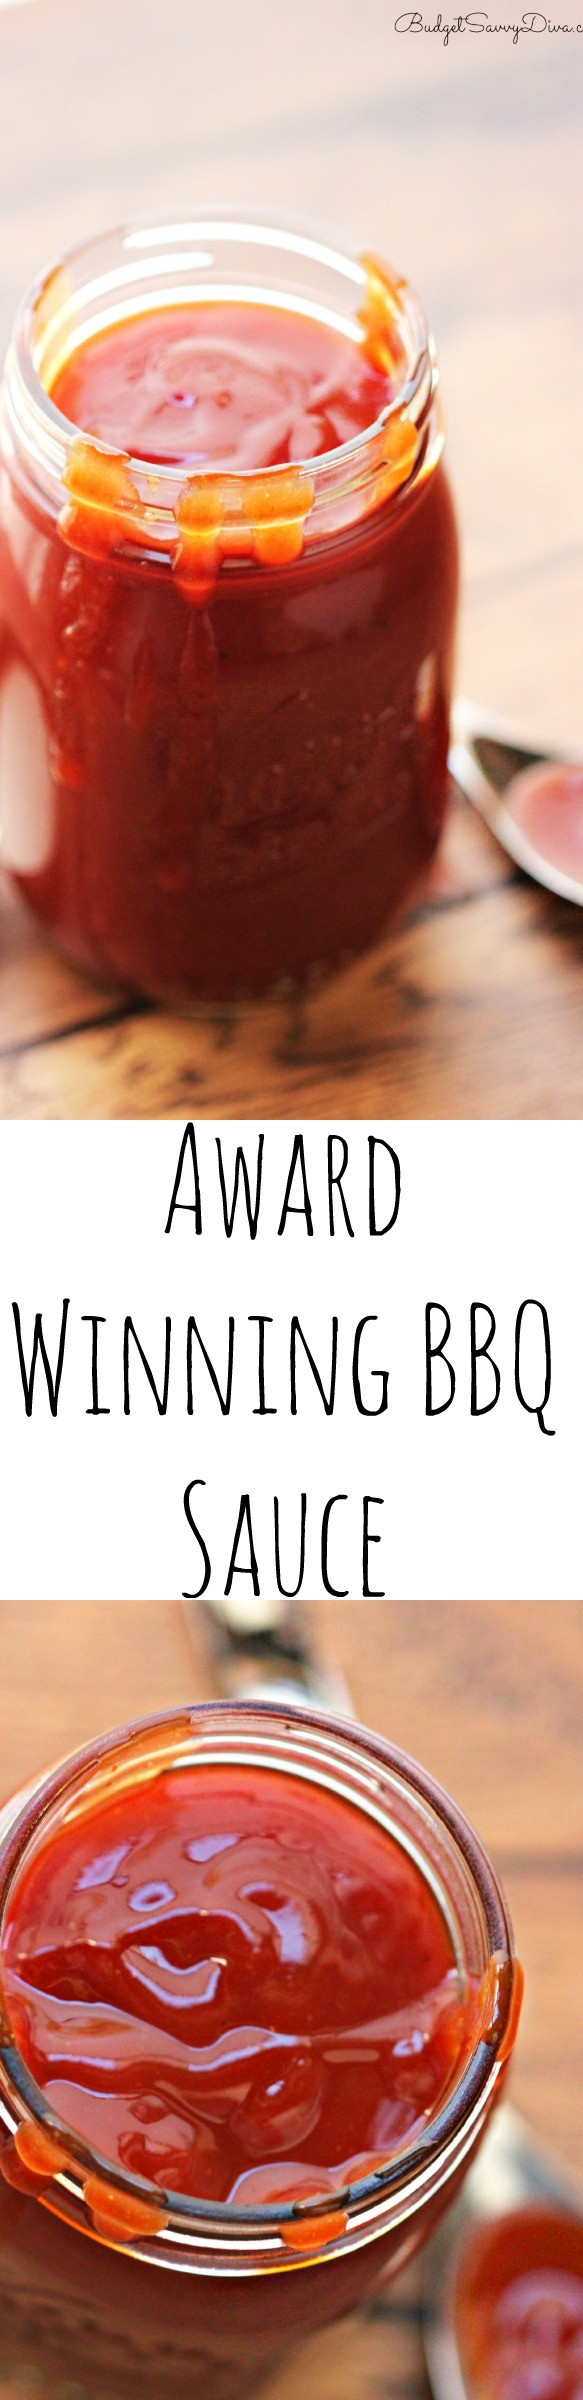 Award Winning Bbq Sauce Recipes
 Award Winning BBQ Sauce Recipe